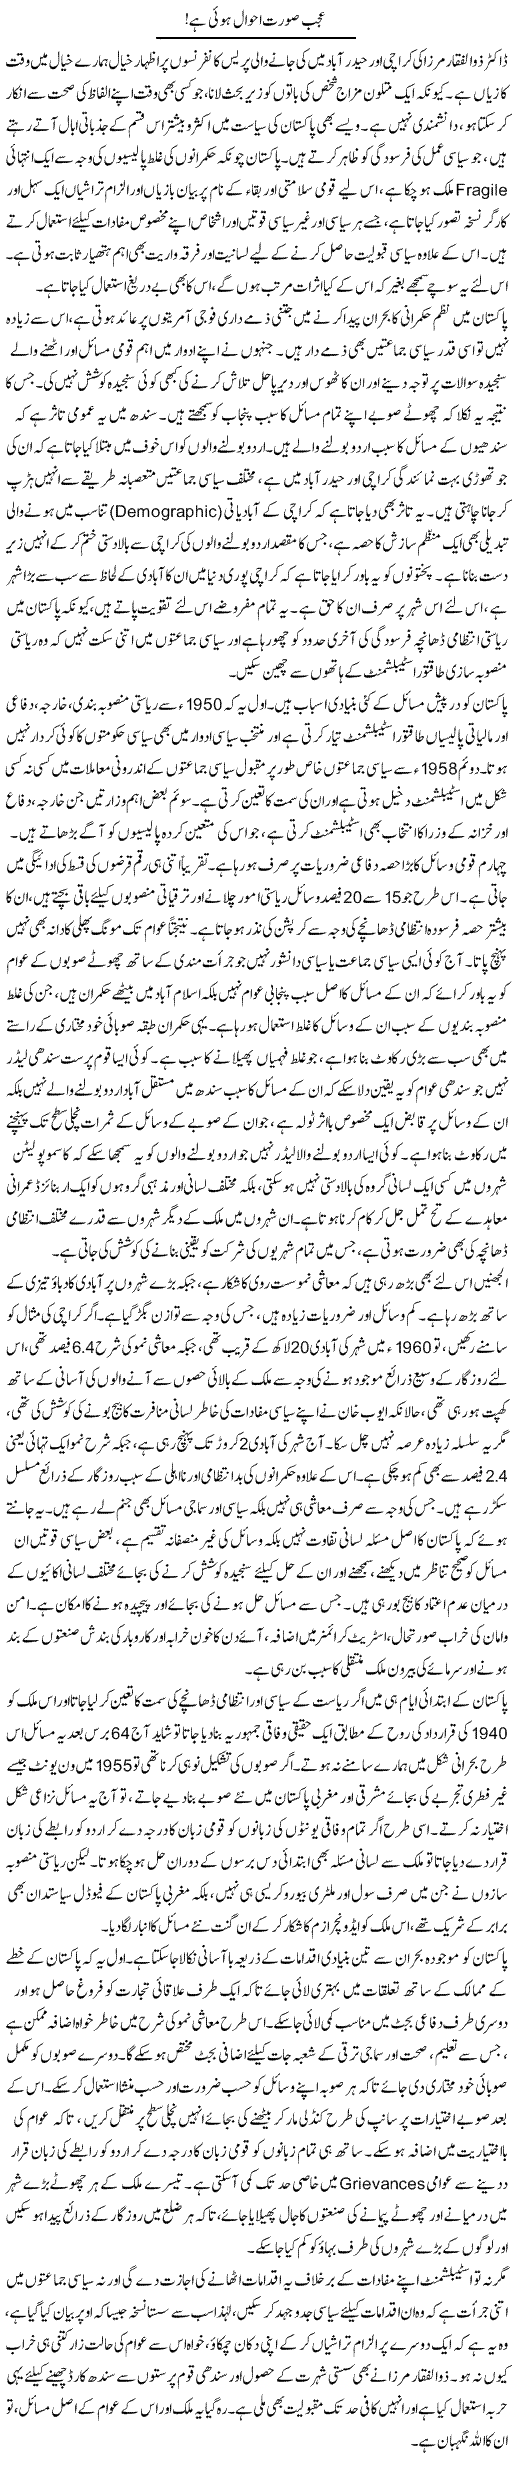 Pakistani State Express Column Muqtada Mansoor 5 September 2011